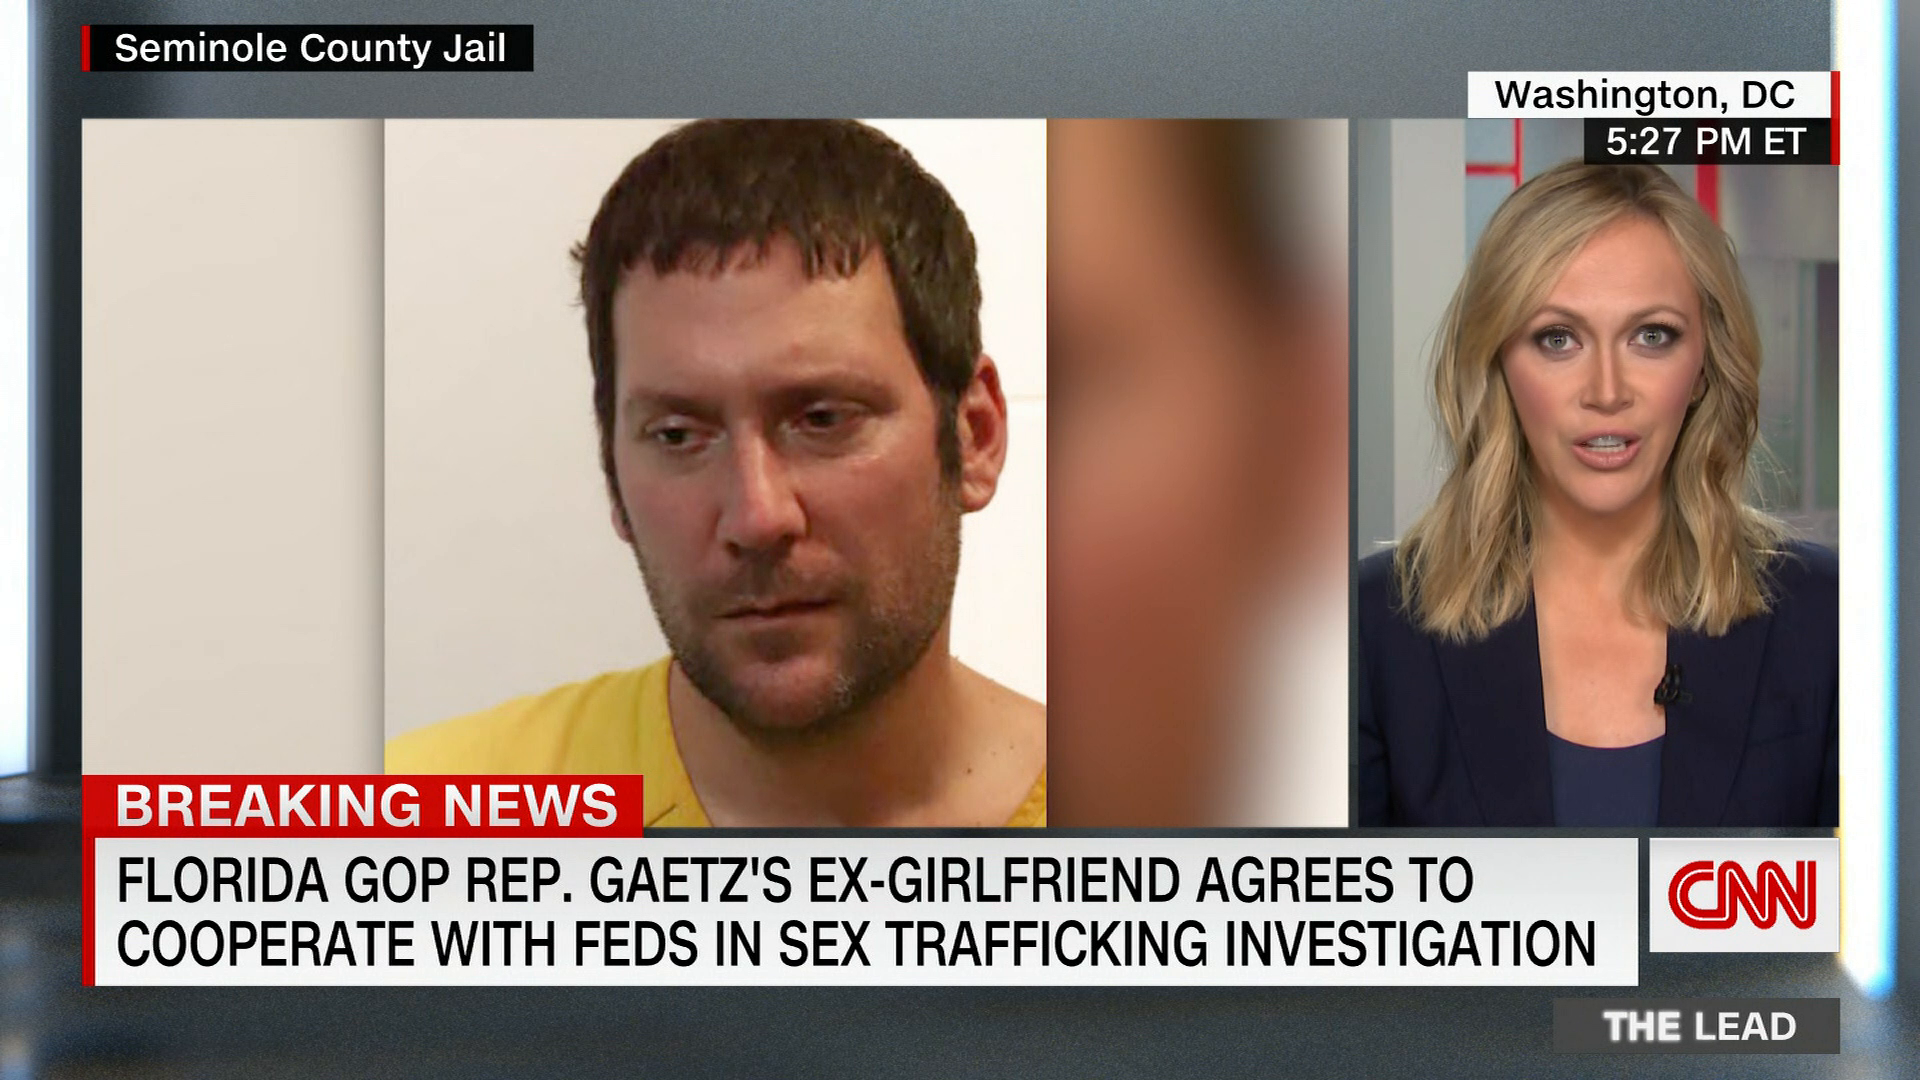 cms3-CNN-gaetz-ex-girlfriend -cooperating-investigation-latest-reid-lead-vpx-primary-96136-321827-1.png